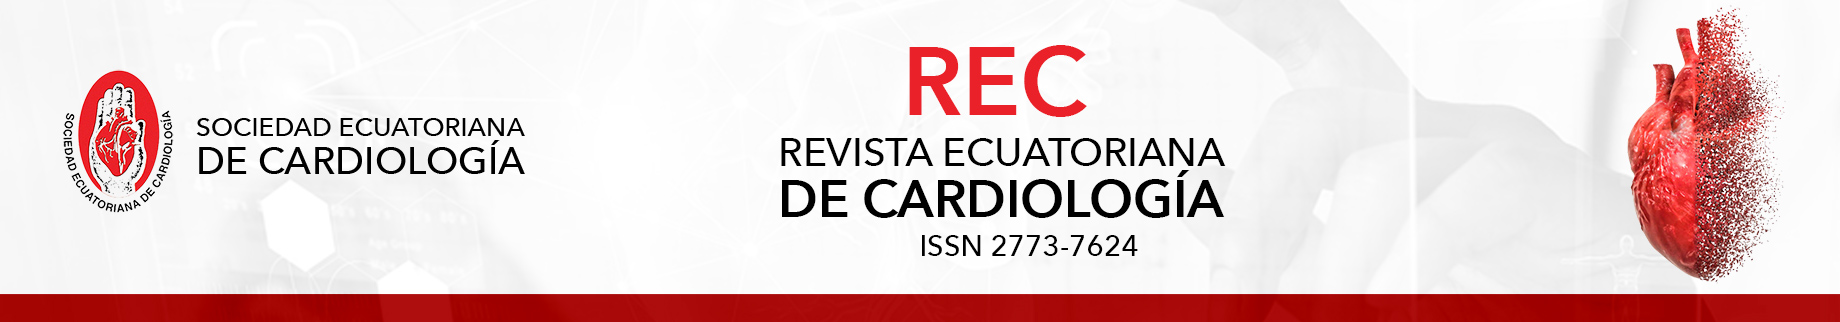 REC - Revista Ecuatoriana de Cardiología